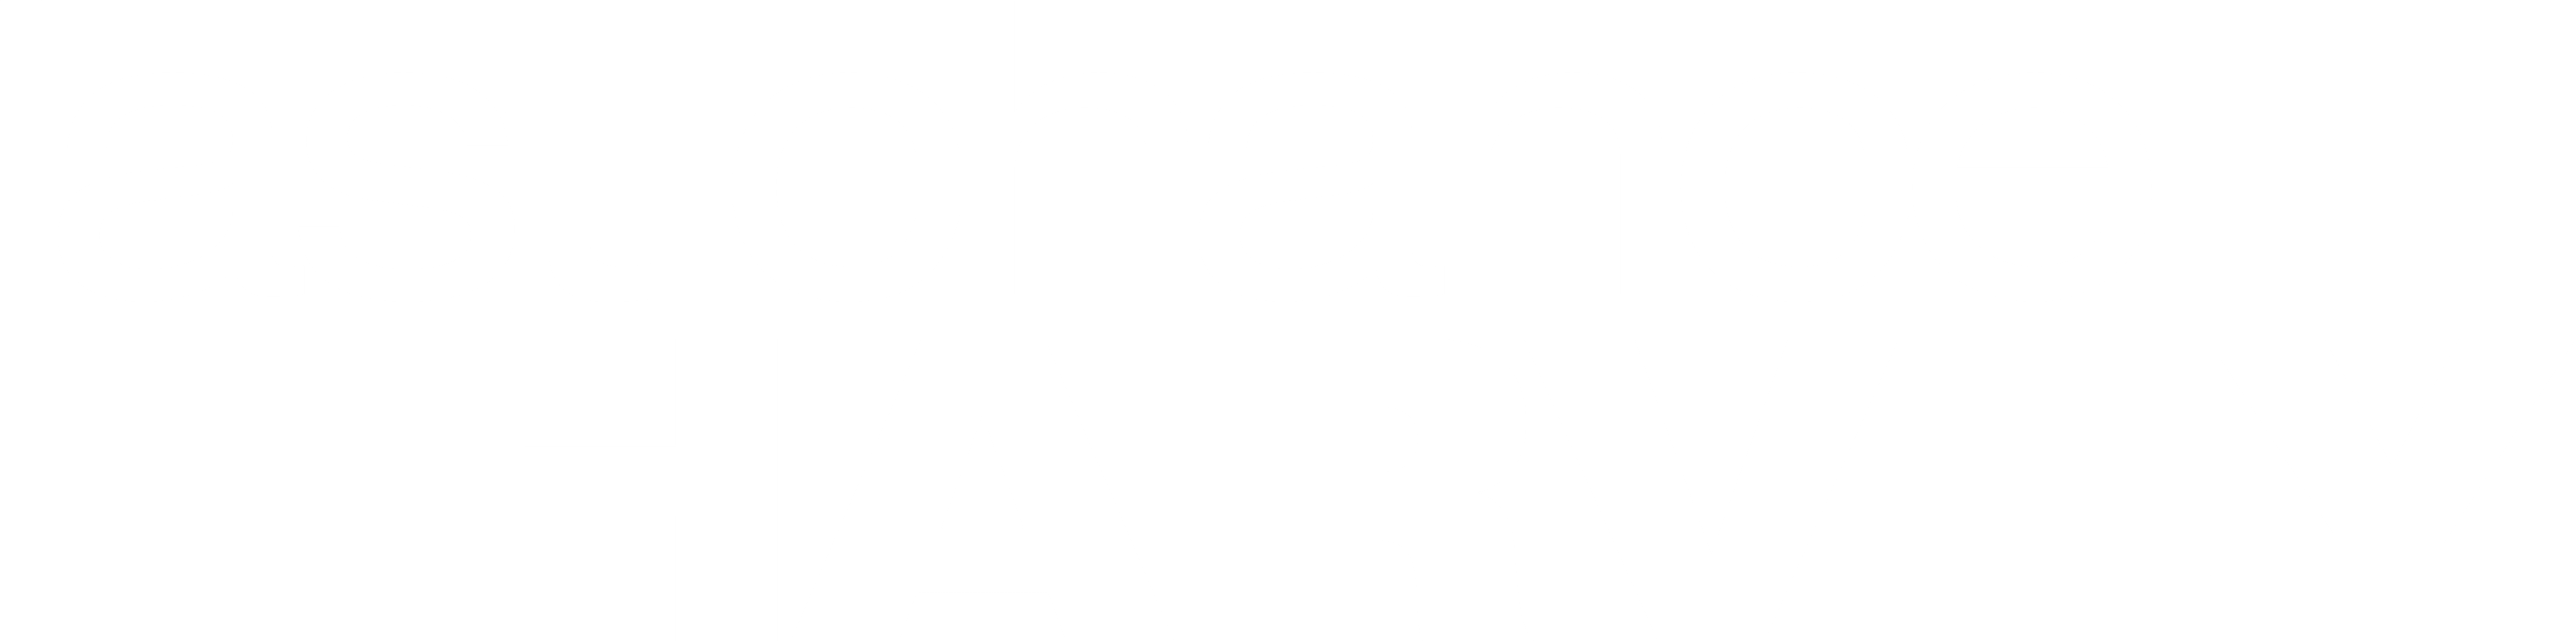 Last Chance Harvey logo